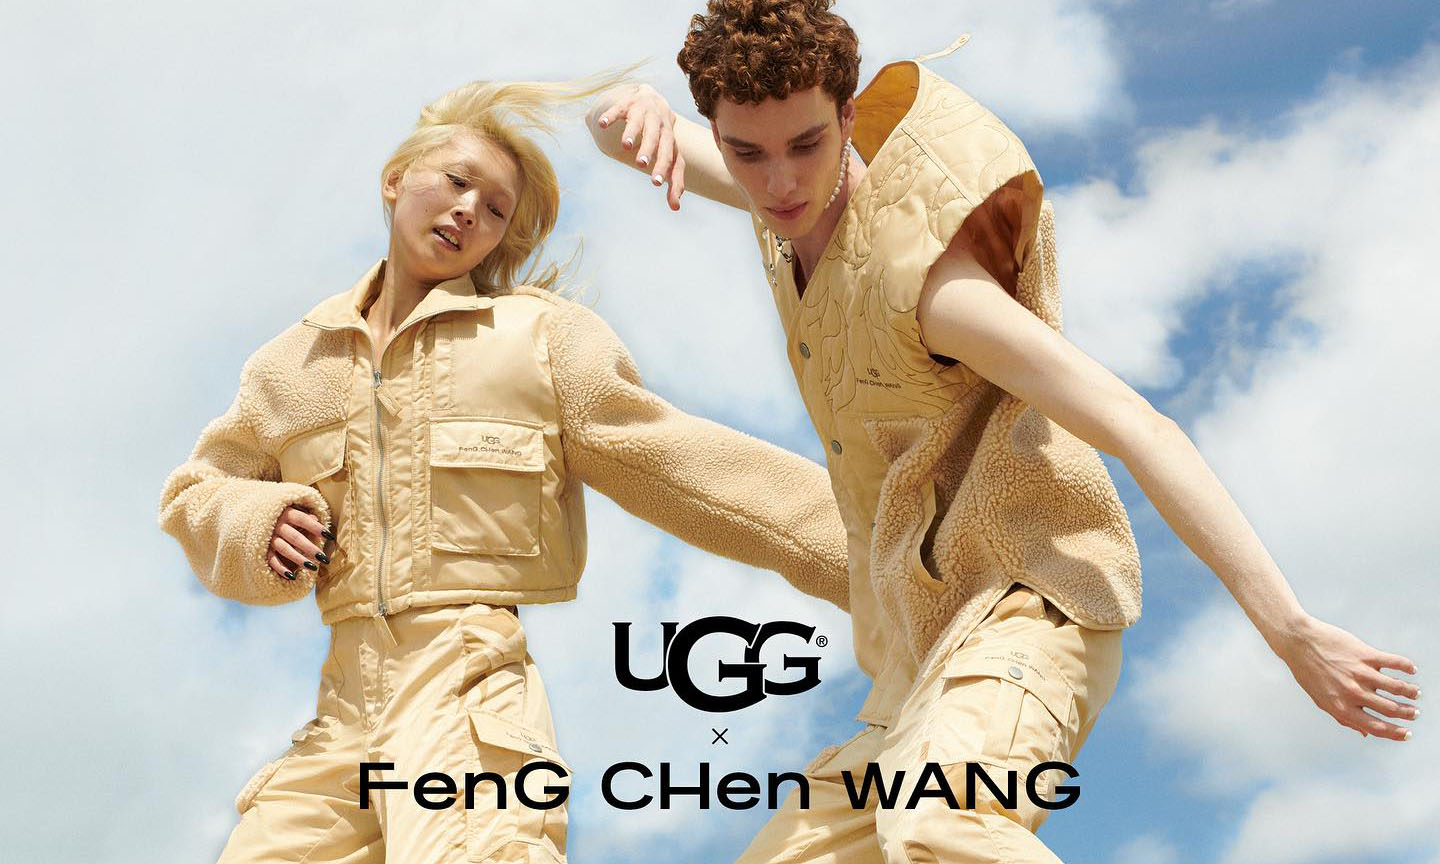 Feng Chen Wang x UGG 合作系列第四弹来袭